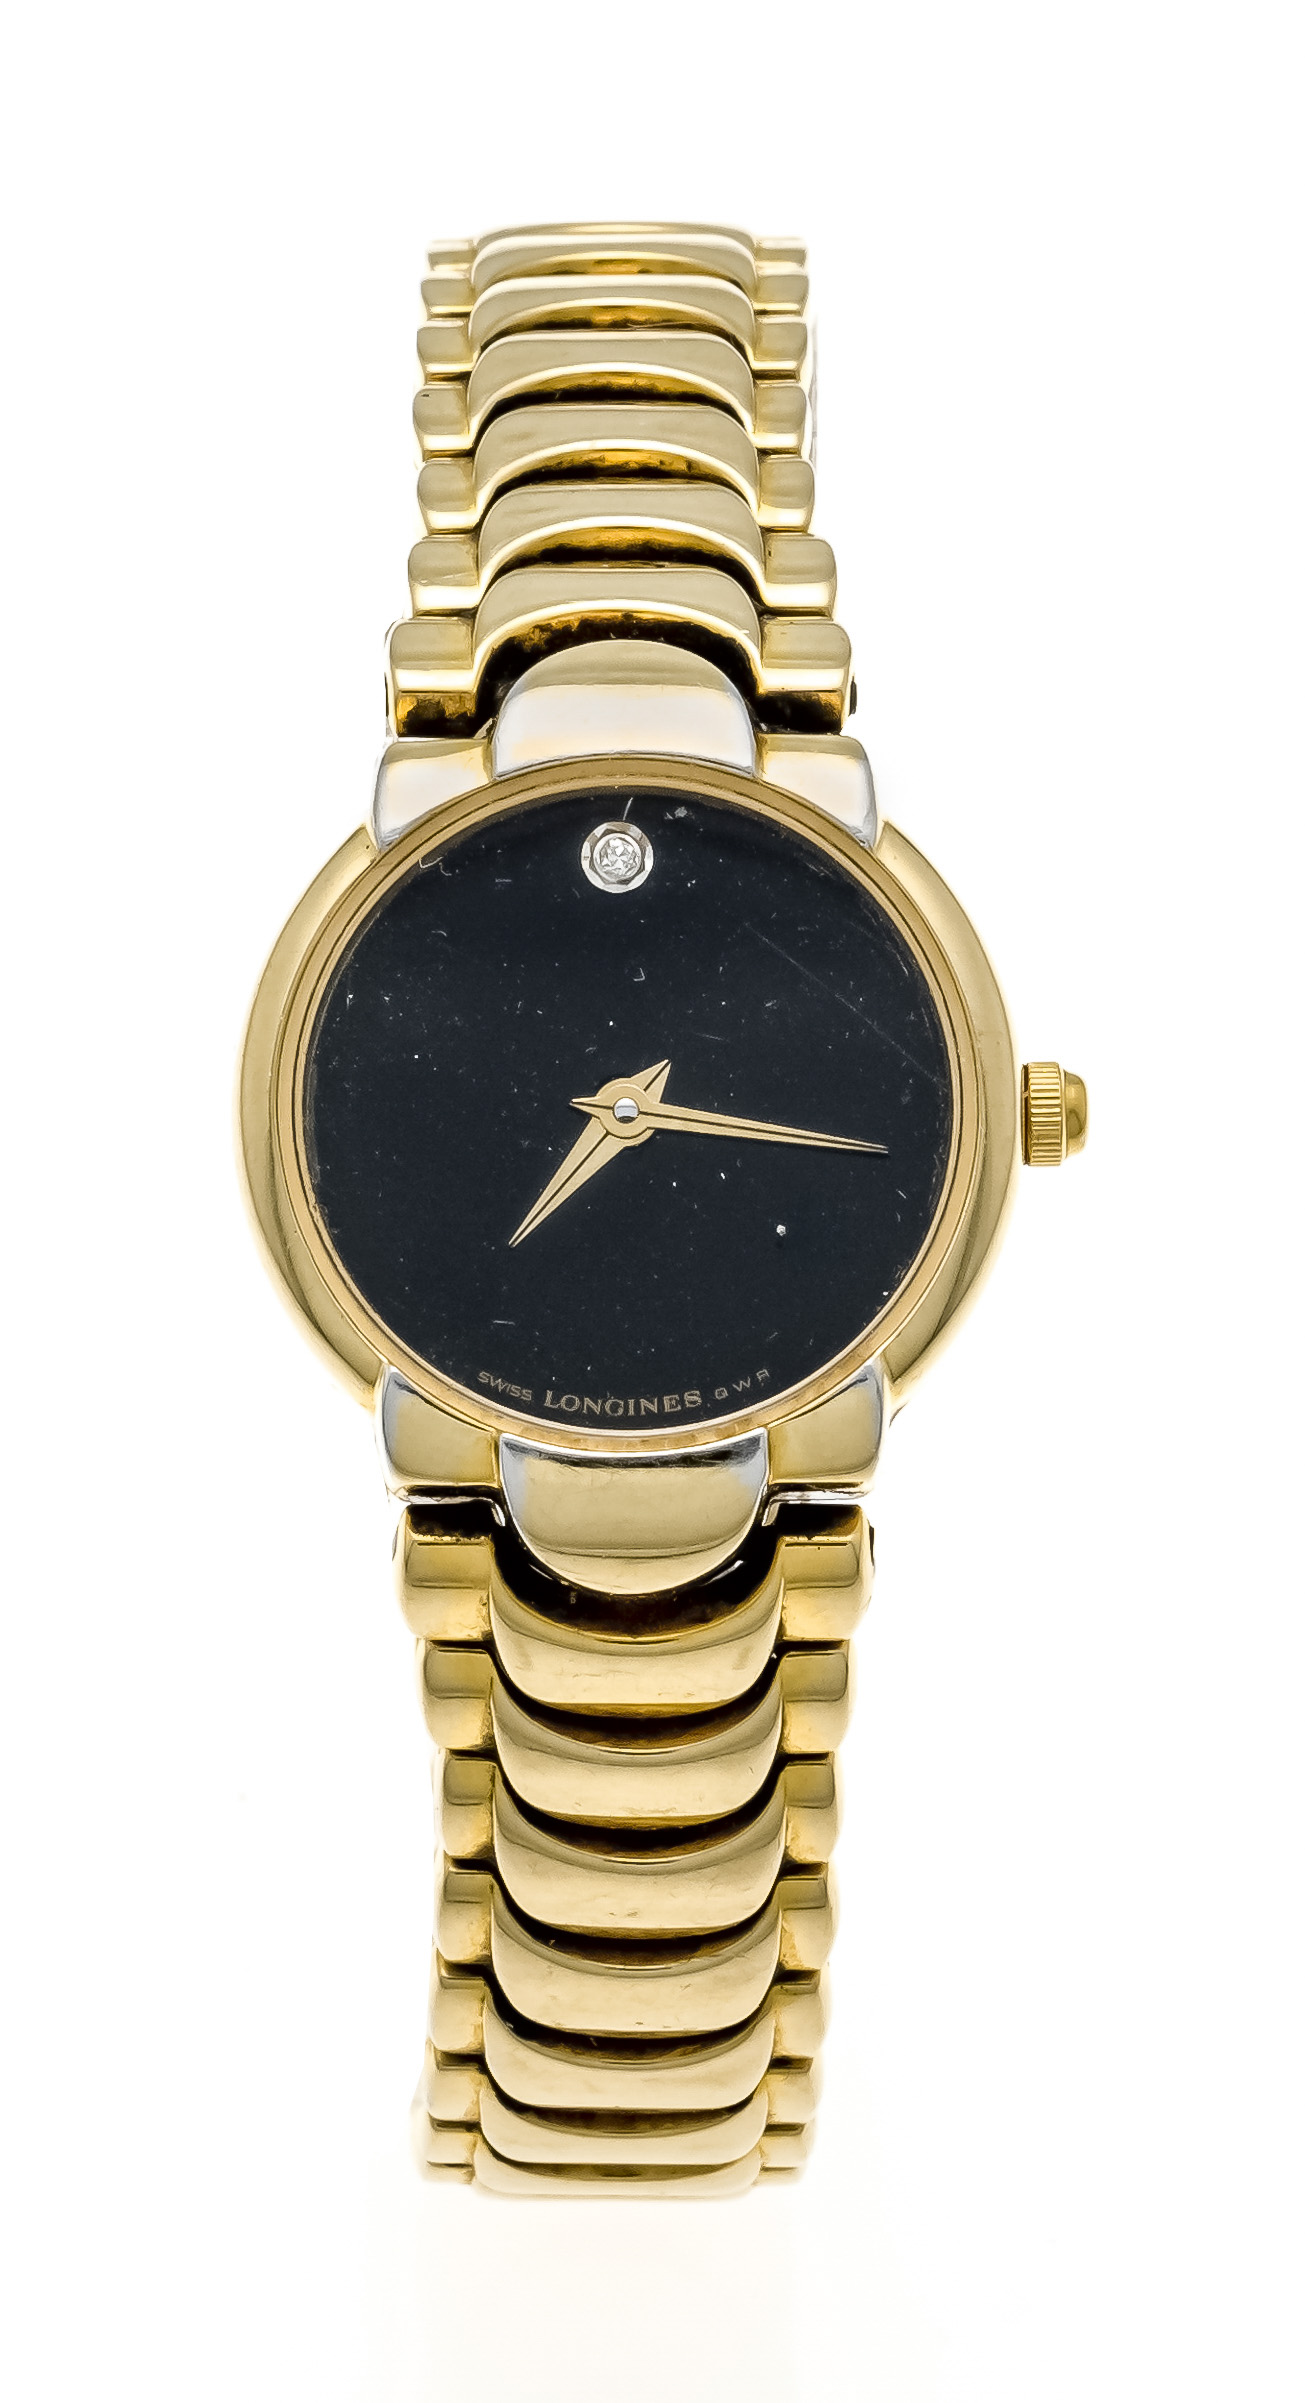 Longines ladies quartz watch, circa 2000, gold-plated with metal bracelet, black dial with diamond